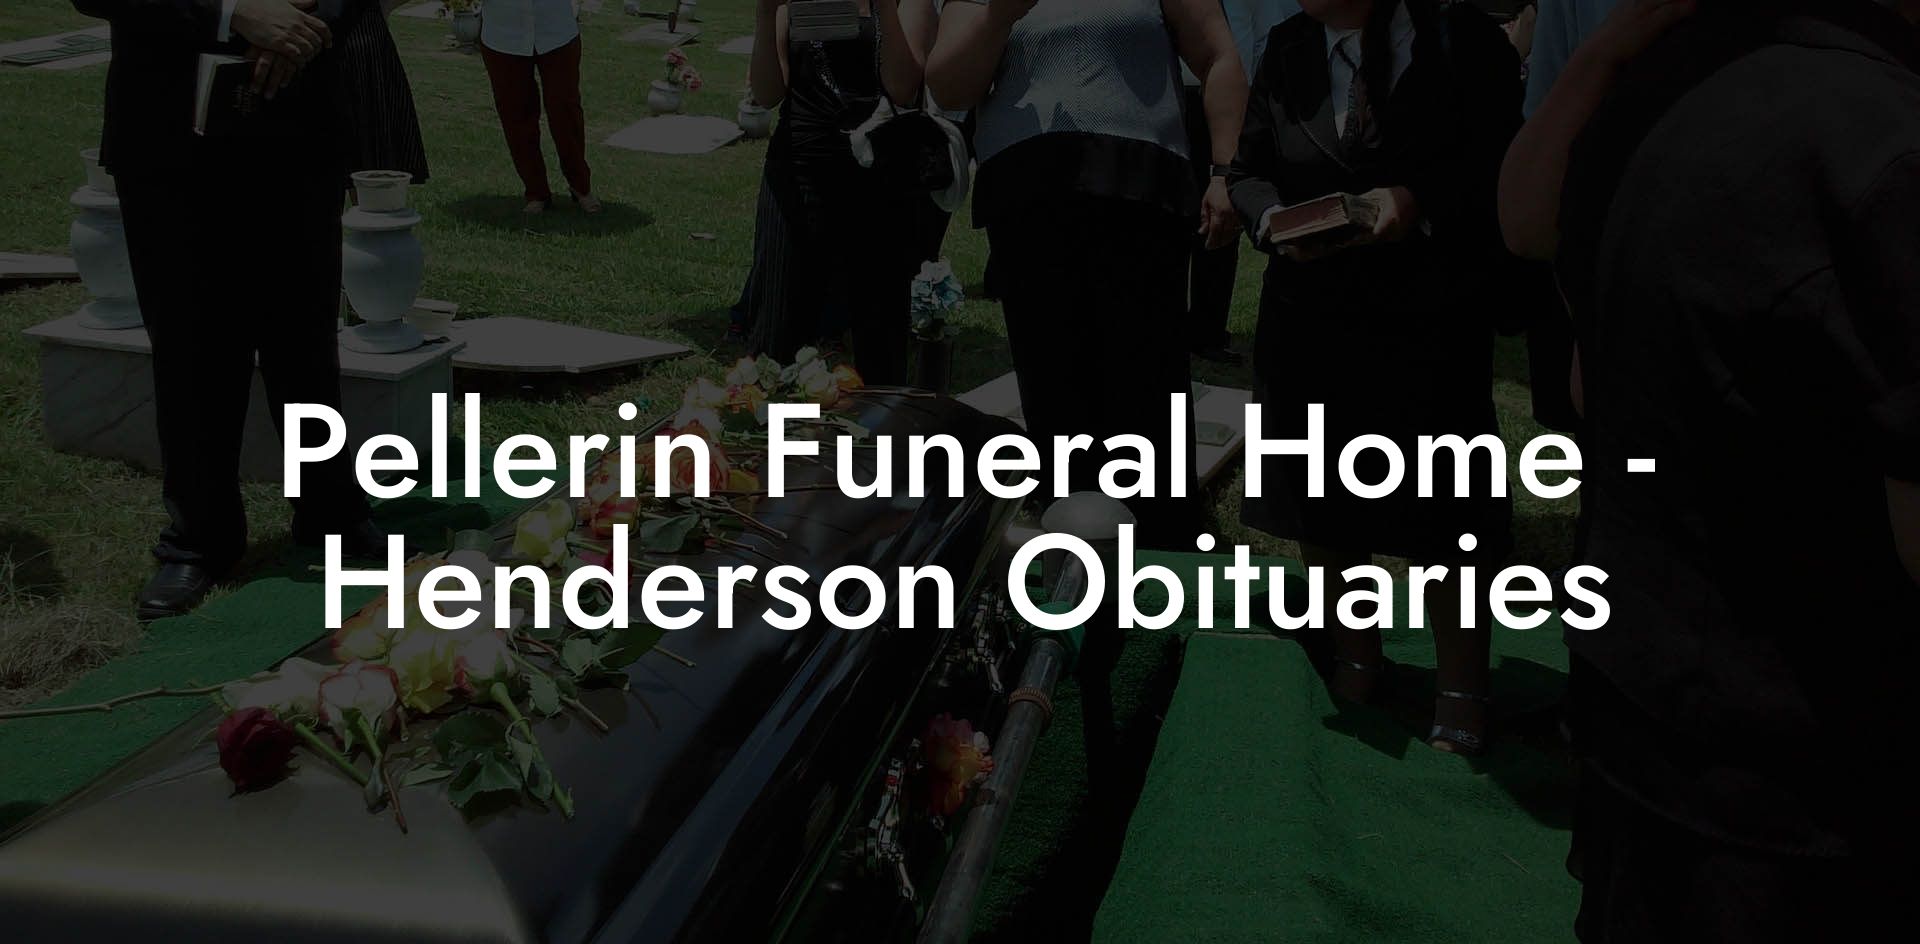 Pellerin Funeral Home - Henderson Obituaries